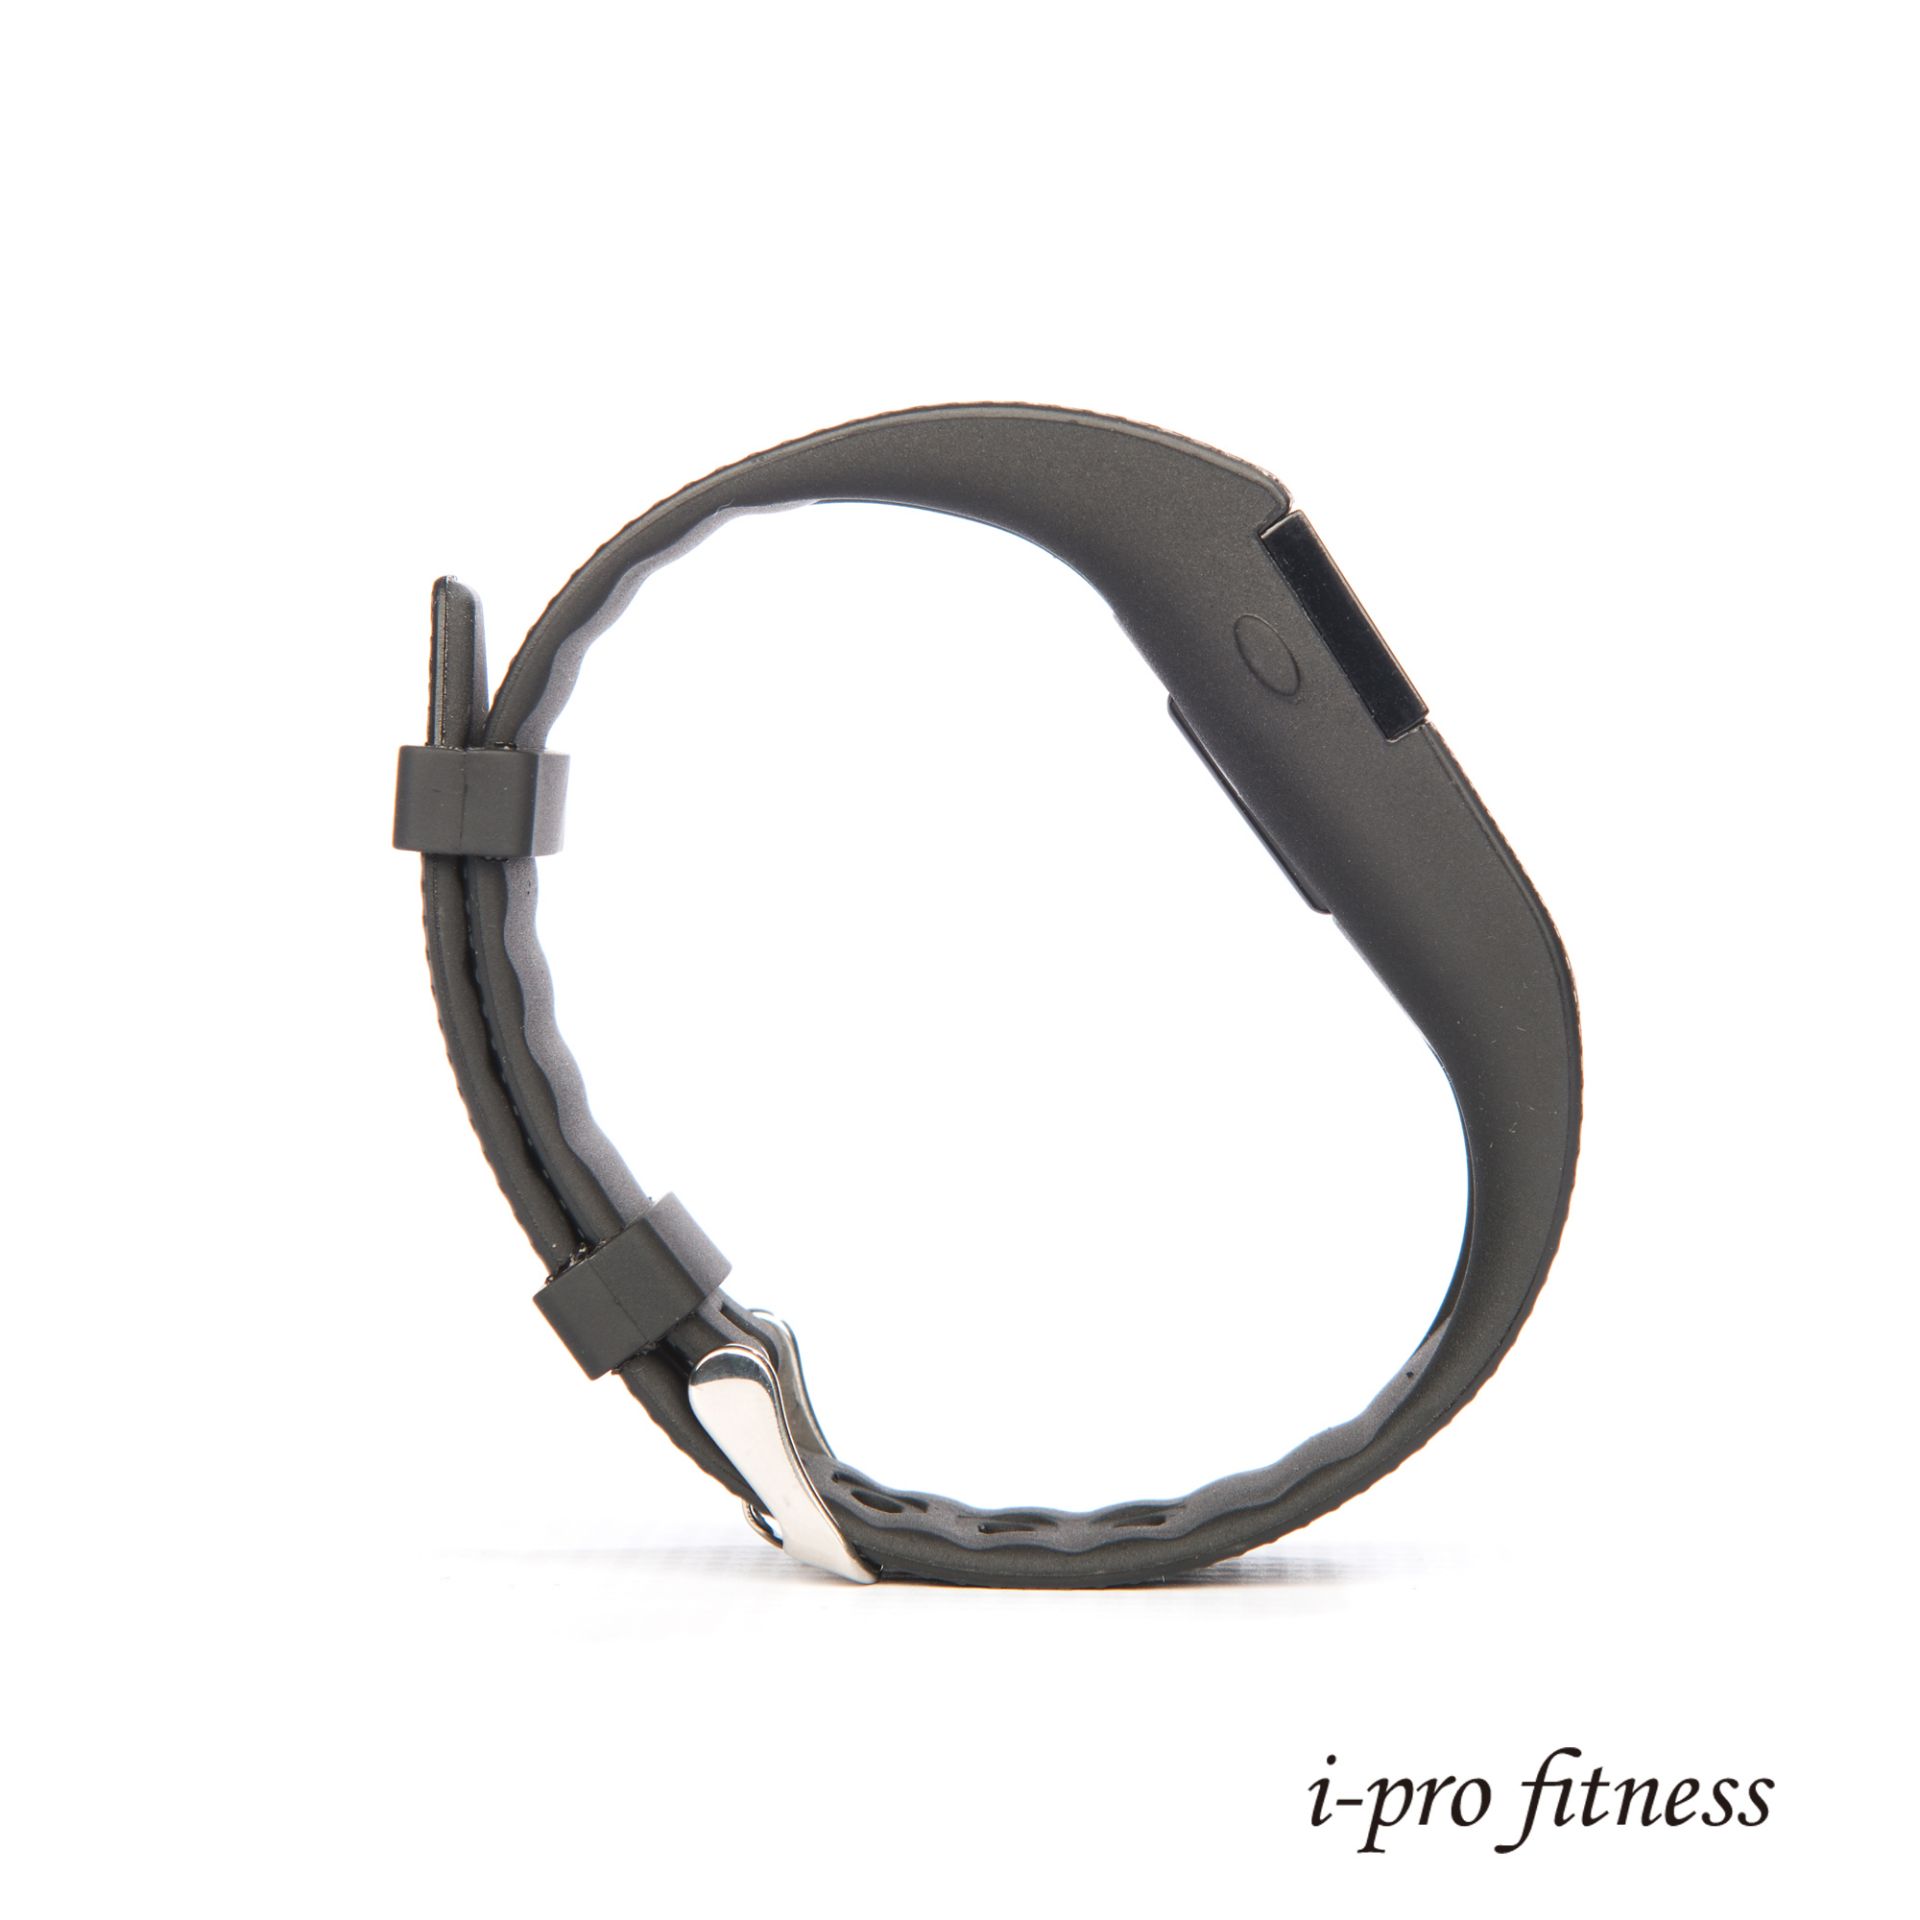 10x Fitness Tracker i-pro fitness, Bluetooth 4.0 Sports Smart Bracelet. - Image 4 of 8